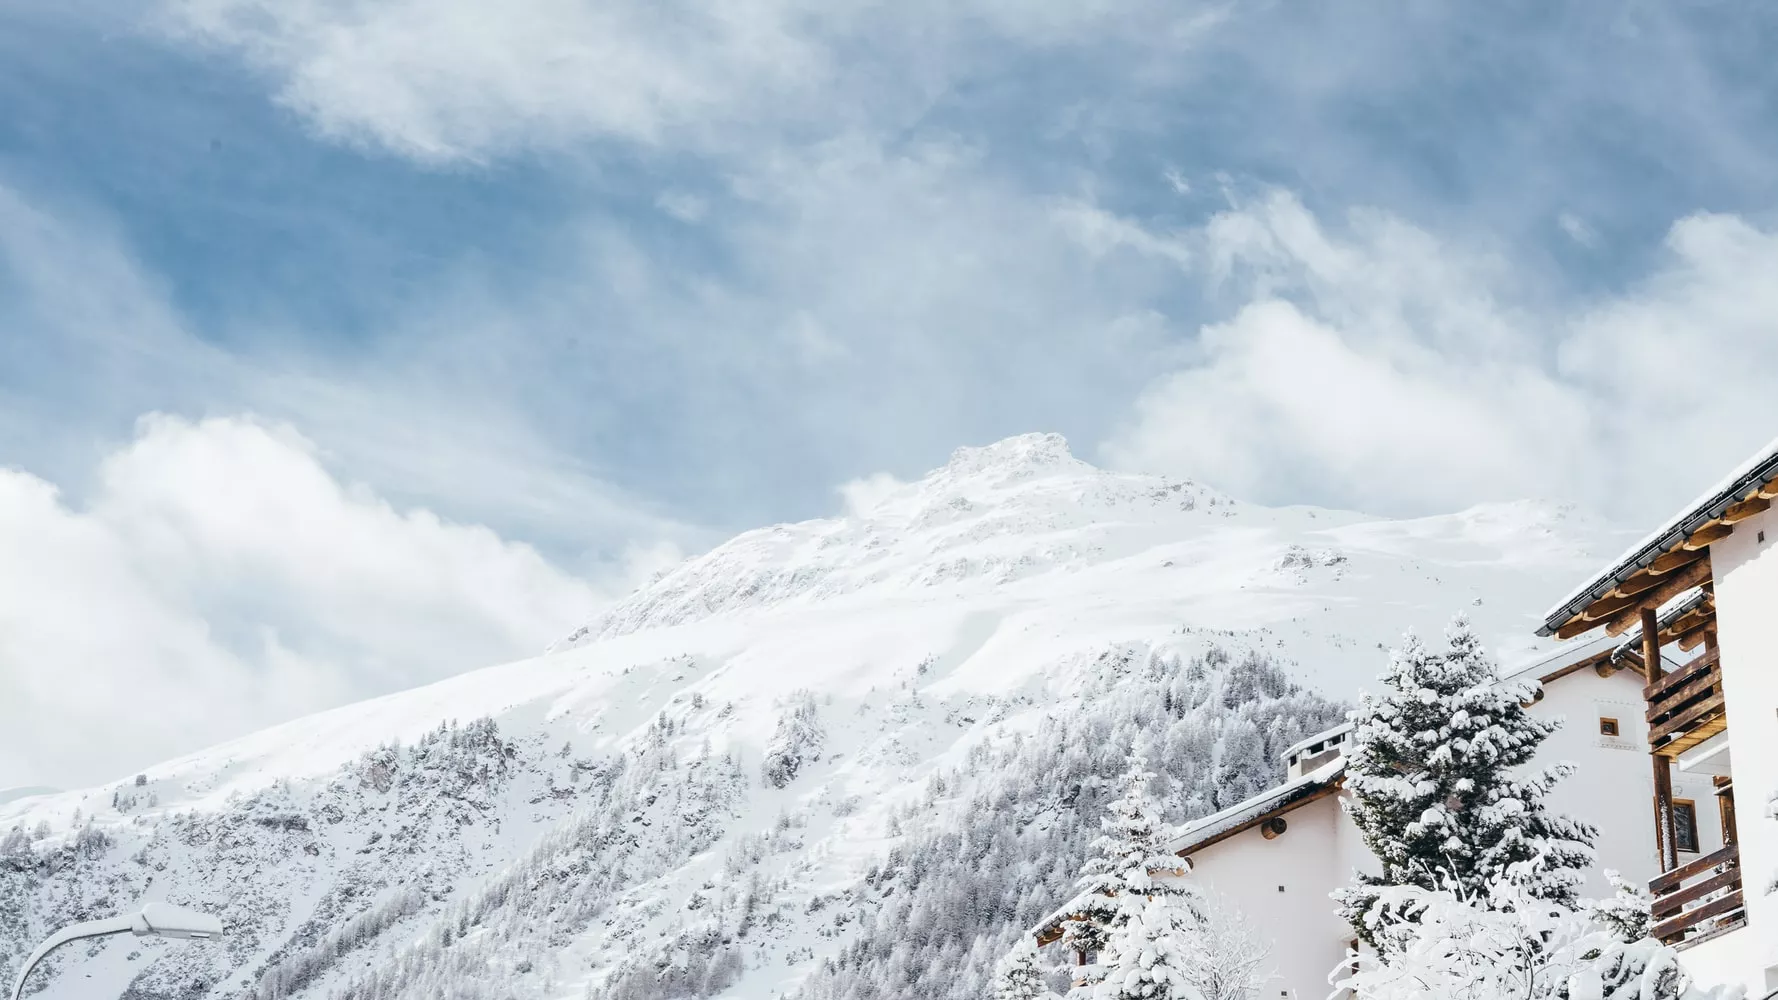 Berghotel Randolins in Switzerland, Europe | Snowboarding,Skiing - Rated 3.8